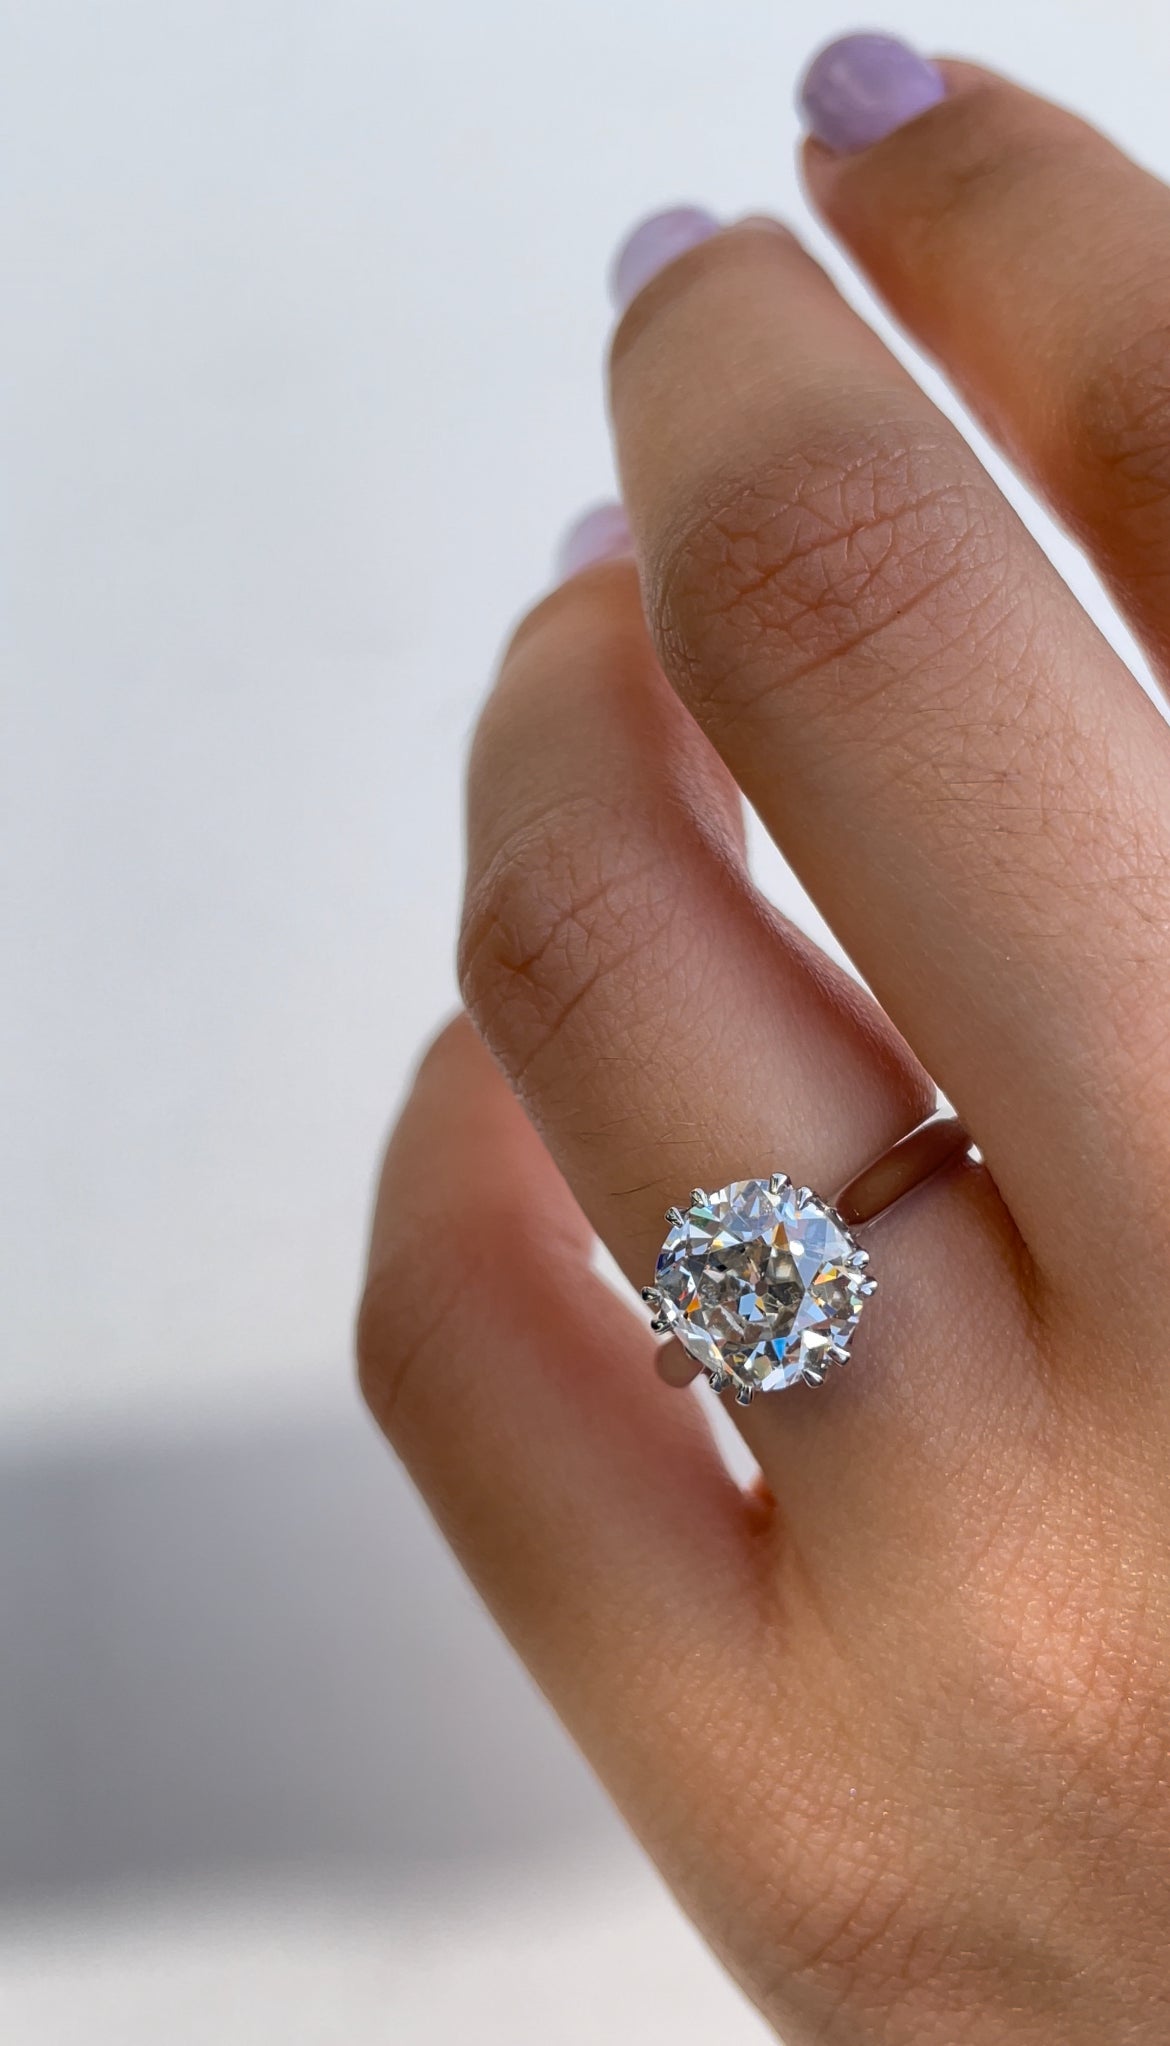 3.04cts Old-Cut Diamond Single Stone Engagement Ring